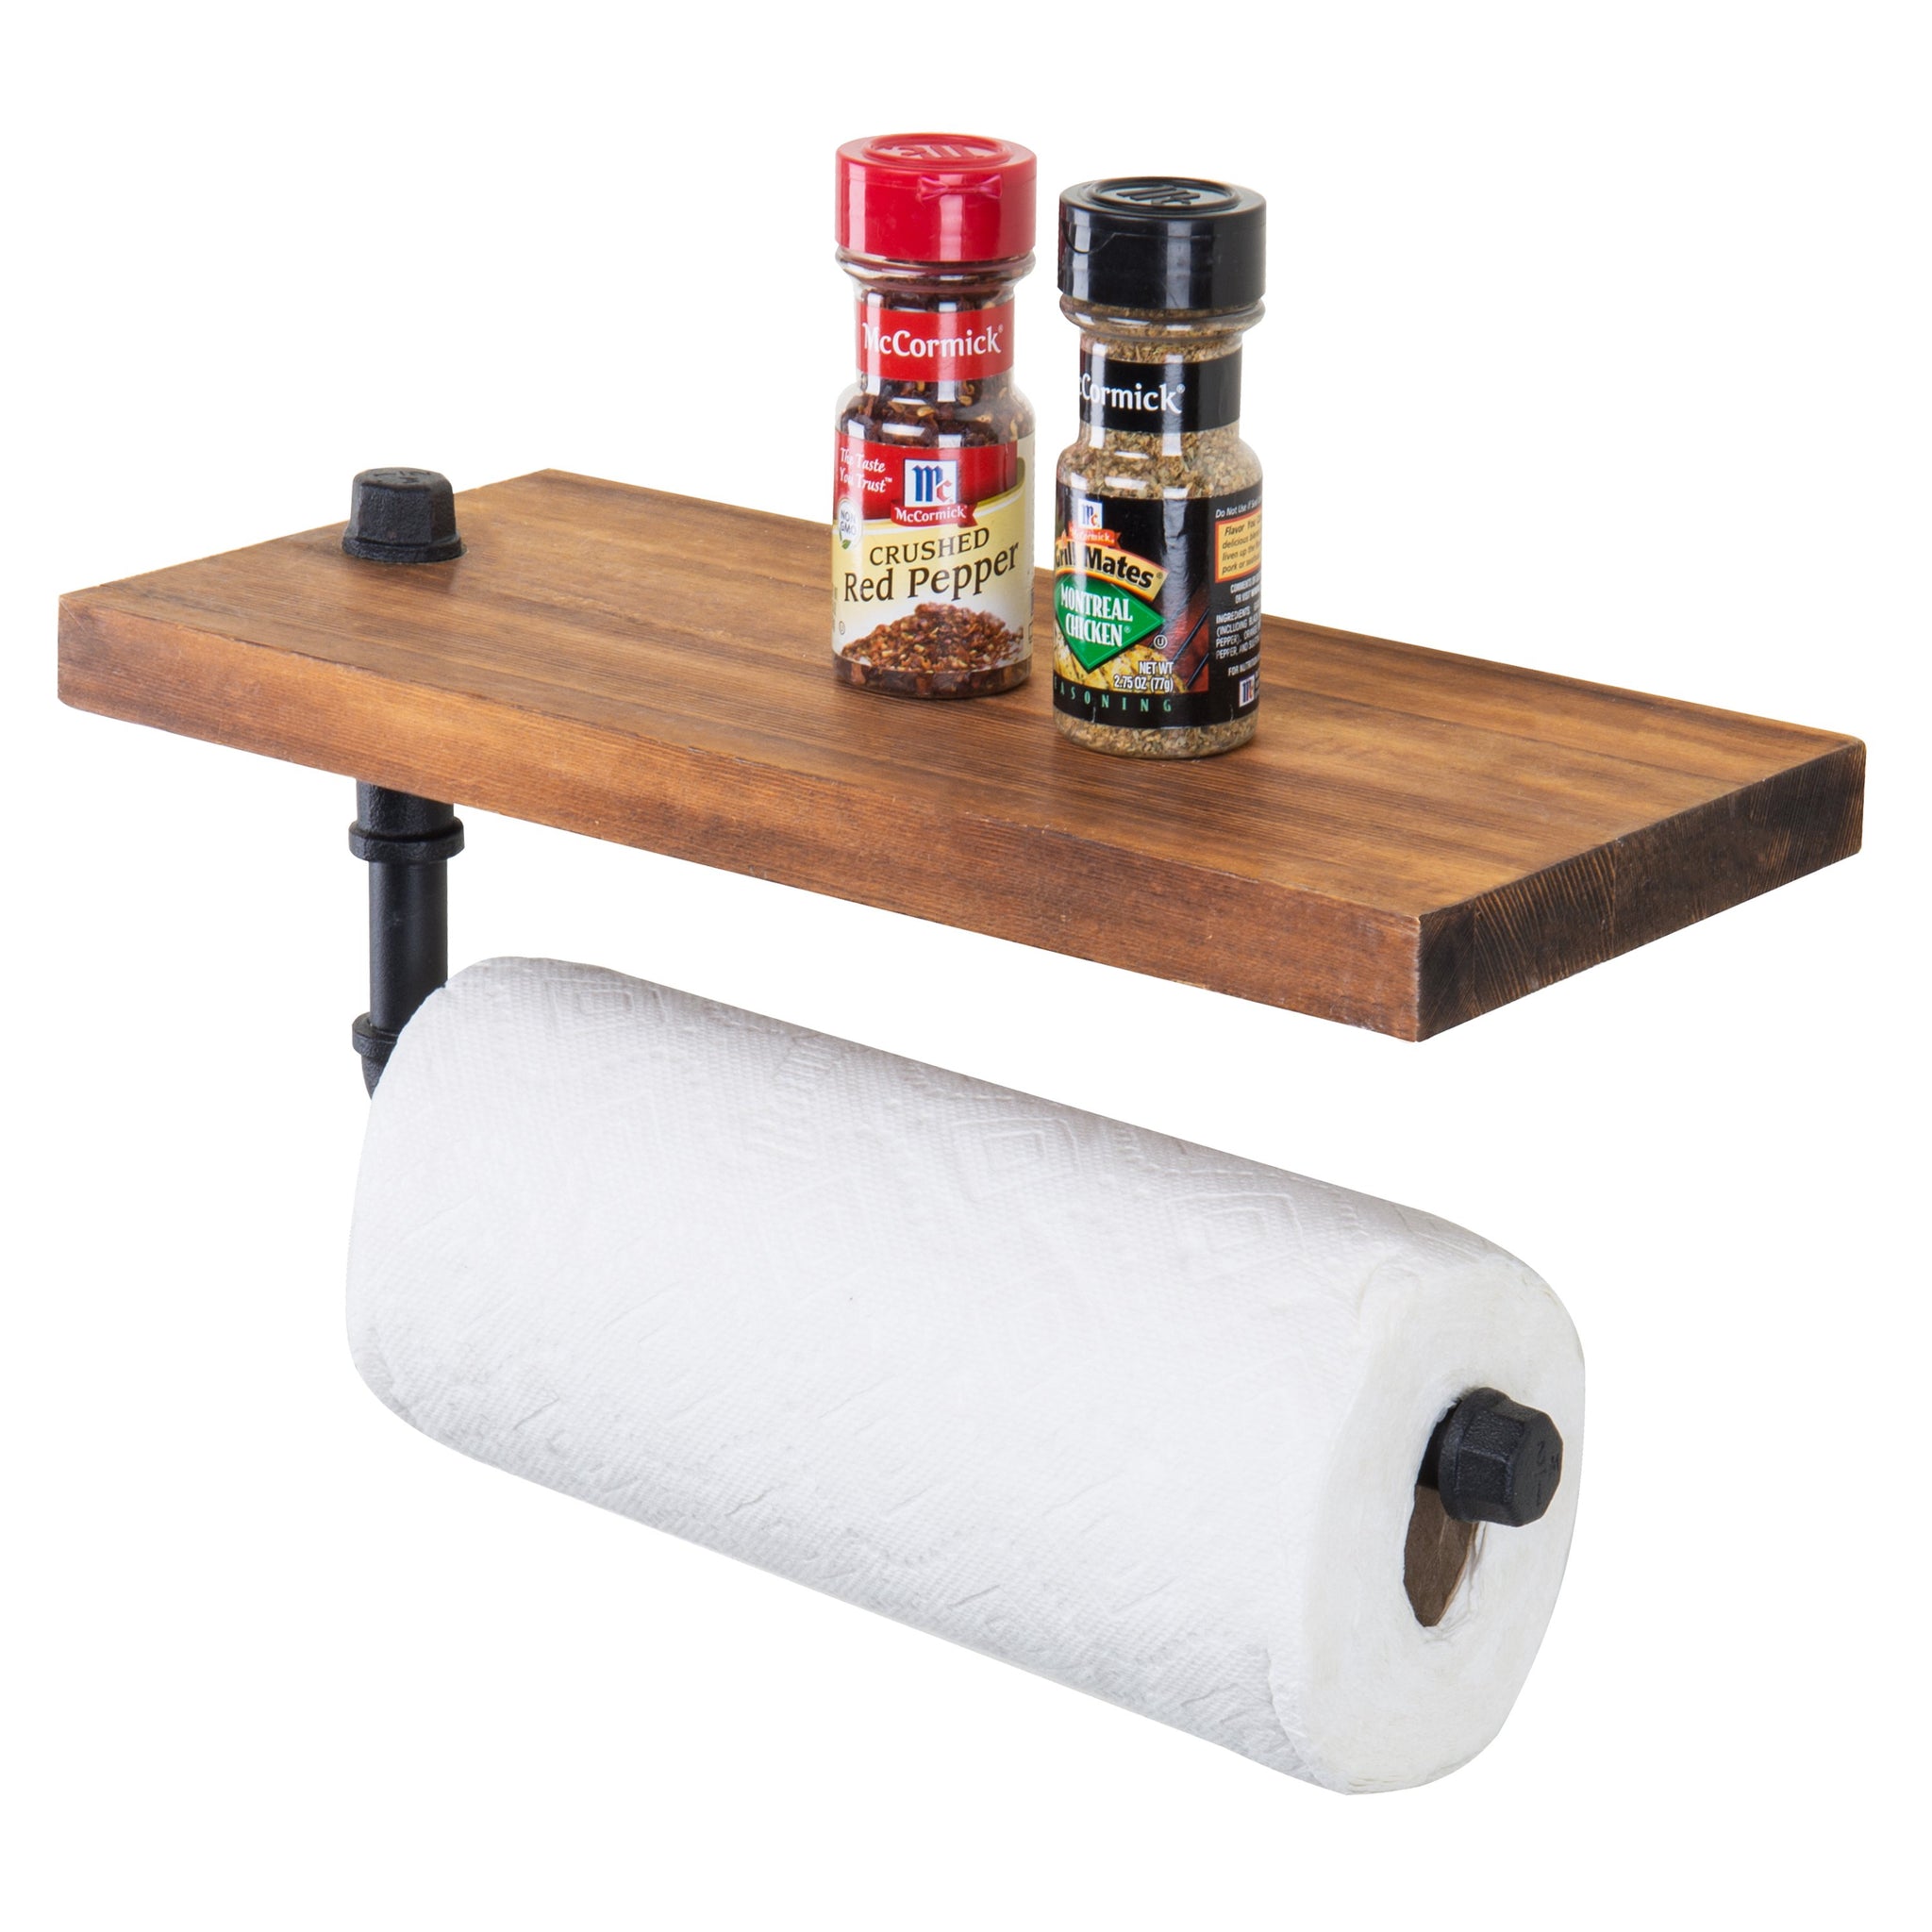 Industrial Pipe Floating Shelf & Paper Towel Holder